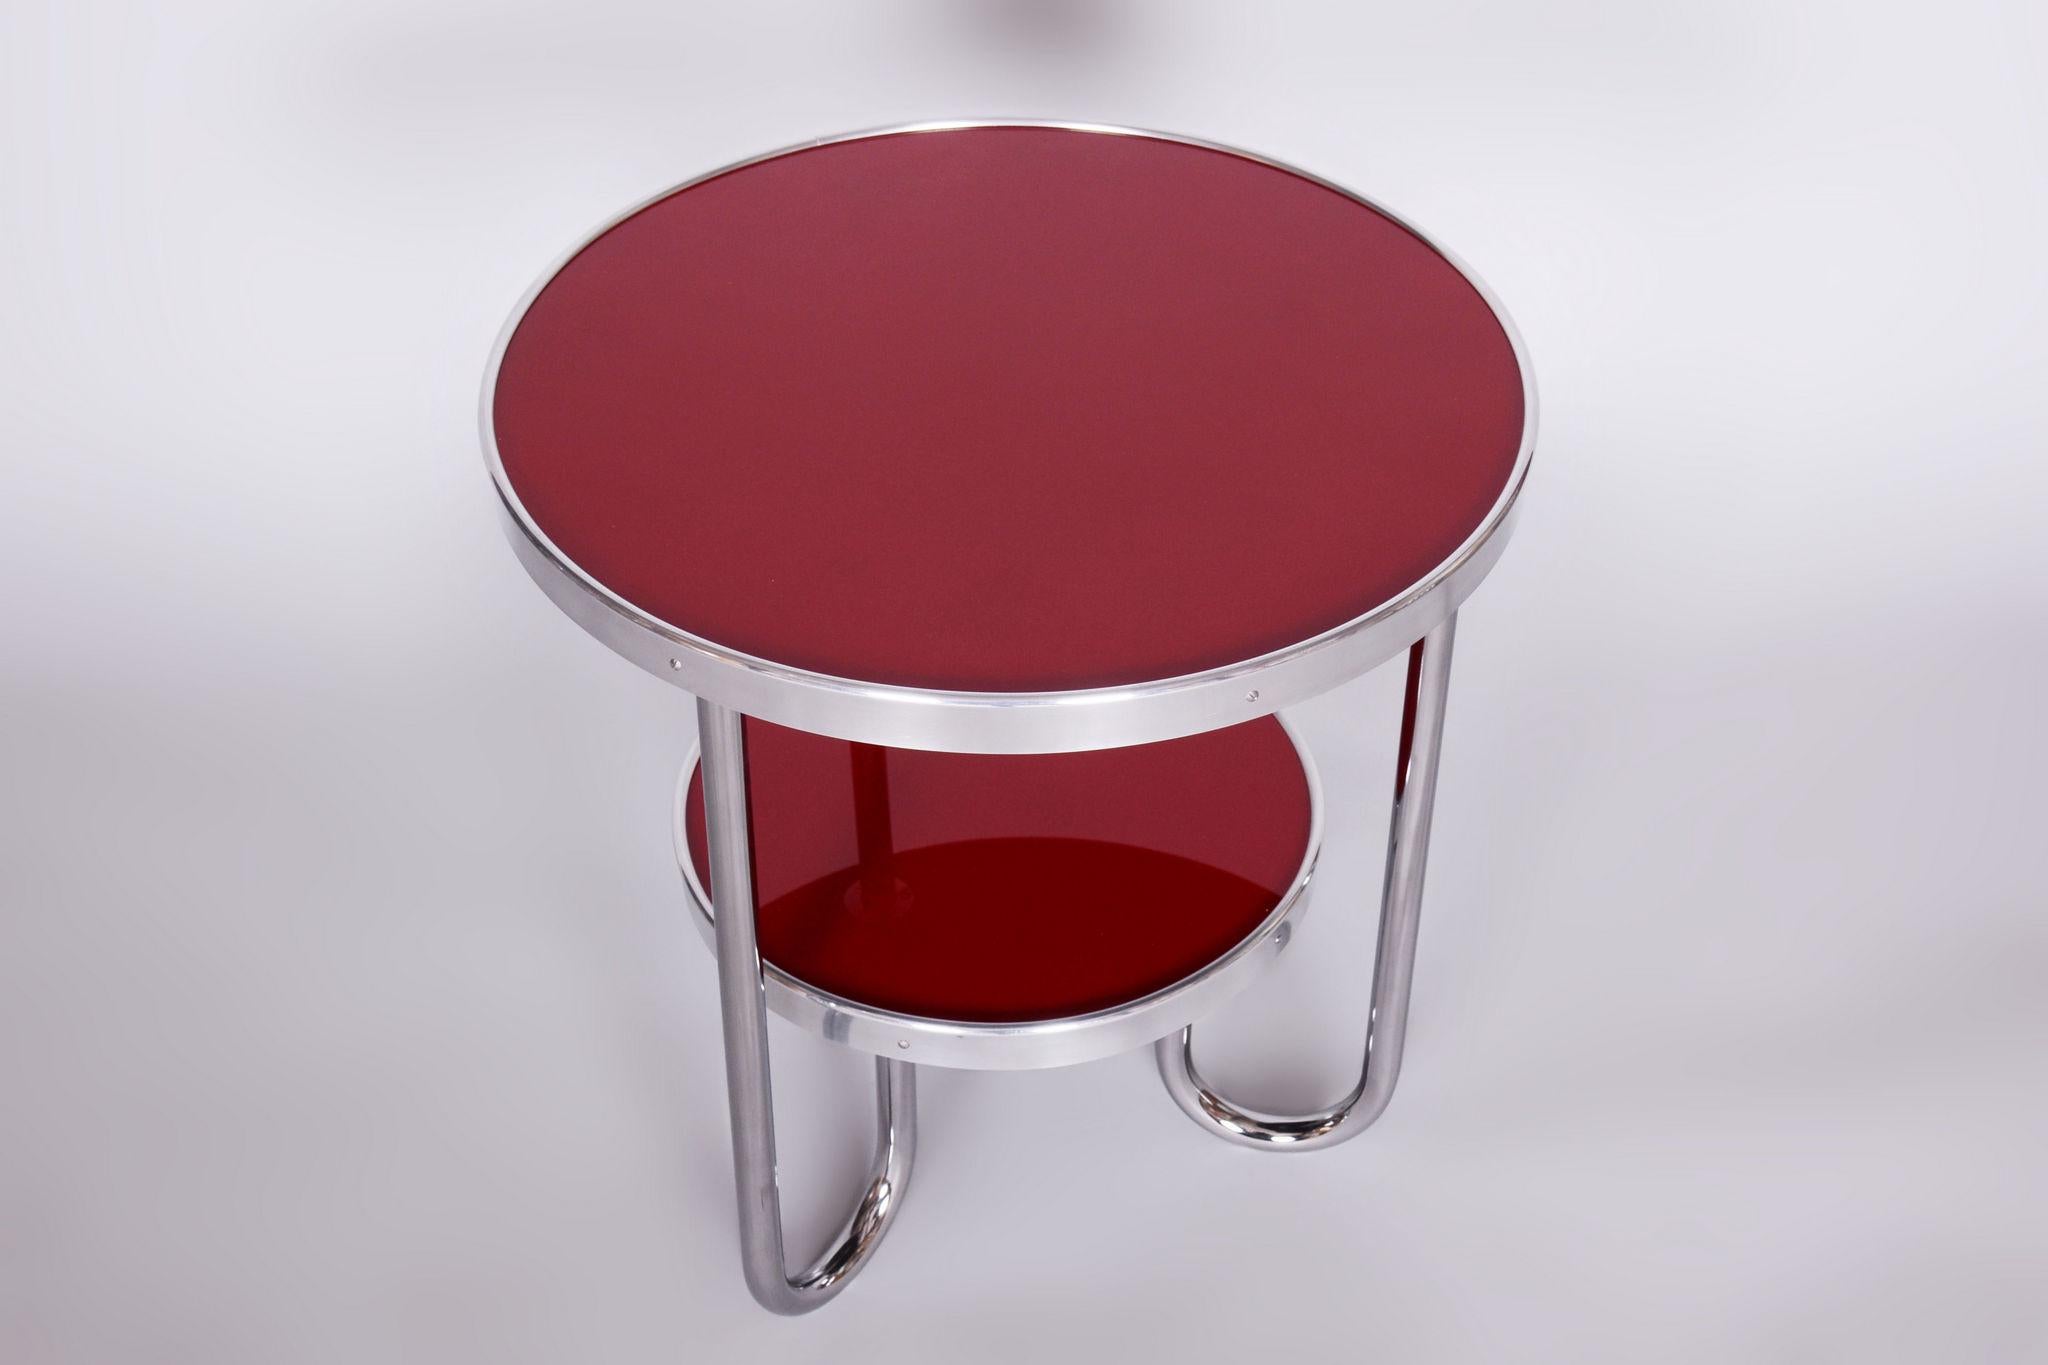 Restored Bauhaus Small Table, Kovona, Spruce, Chrome, Czechia, 1930s For Sale 2